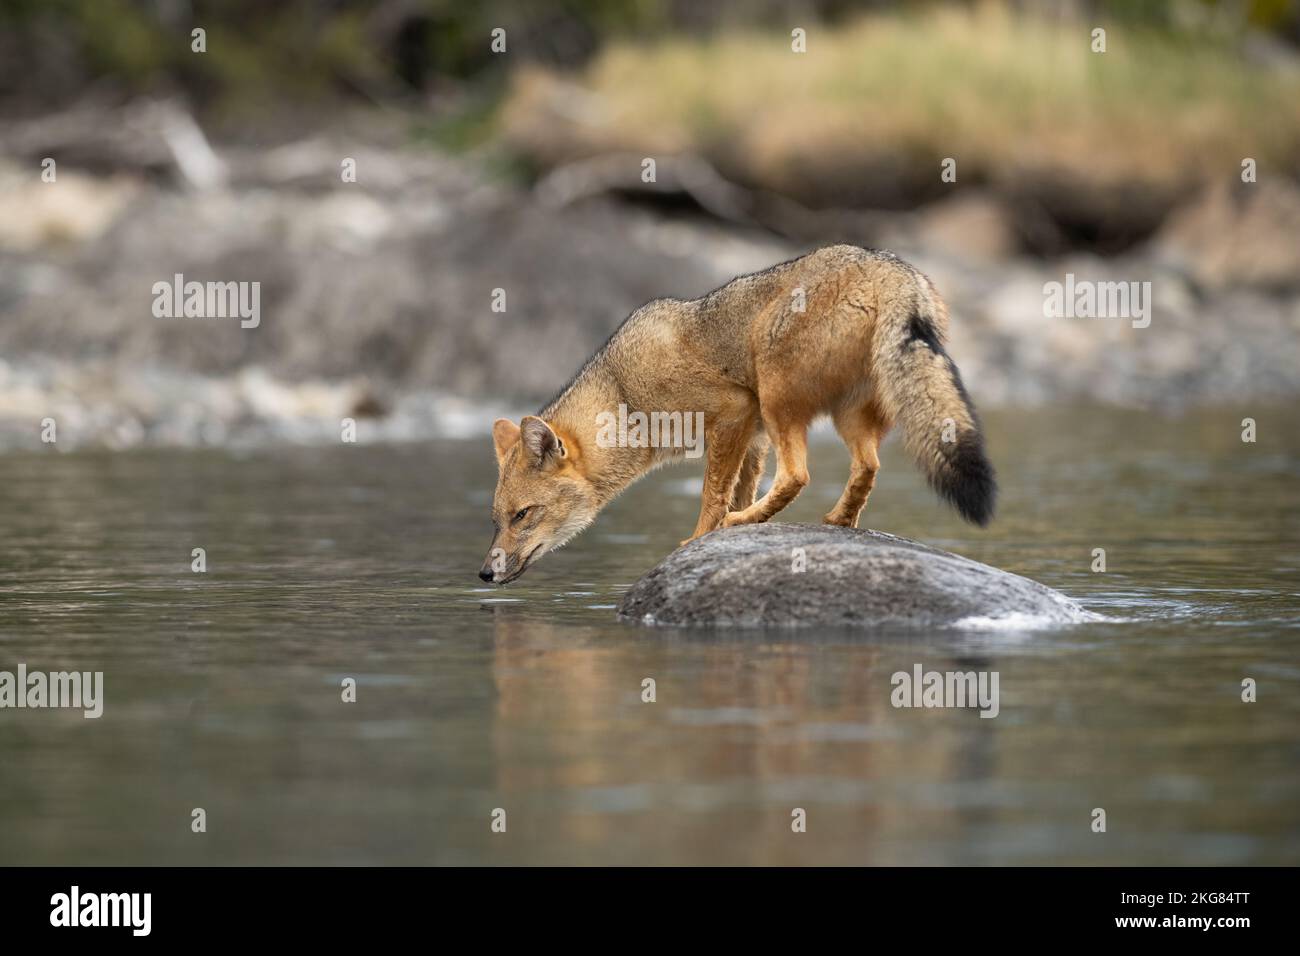 A Culpeo Fox (Lycalopex culpaeus) in Torres del Paine, Chile Stock Photo